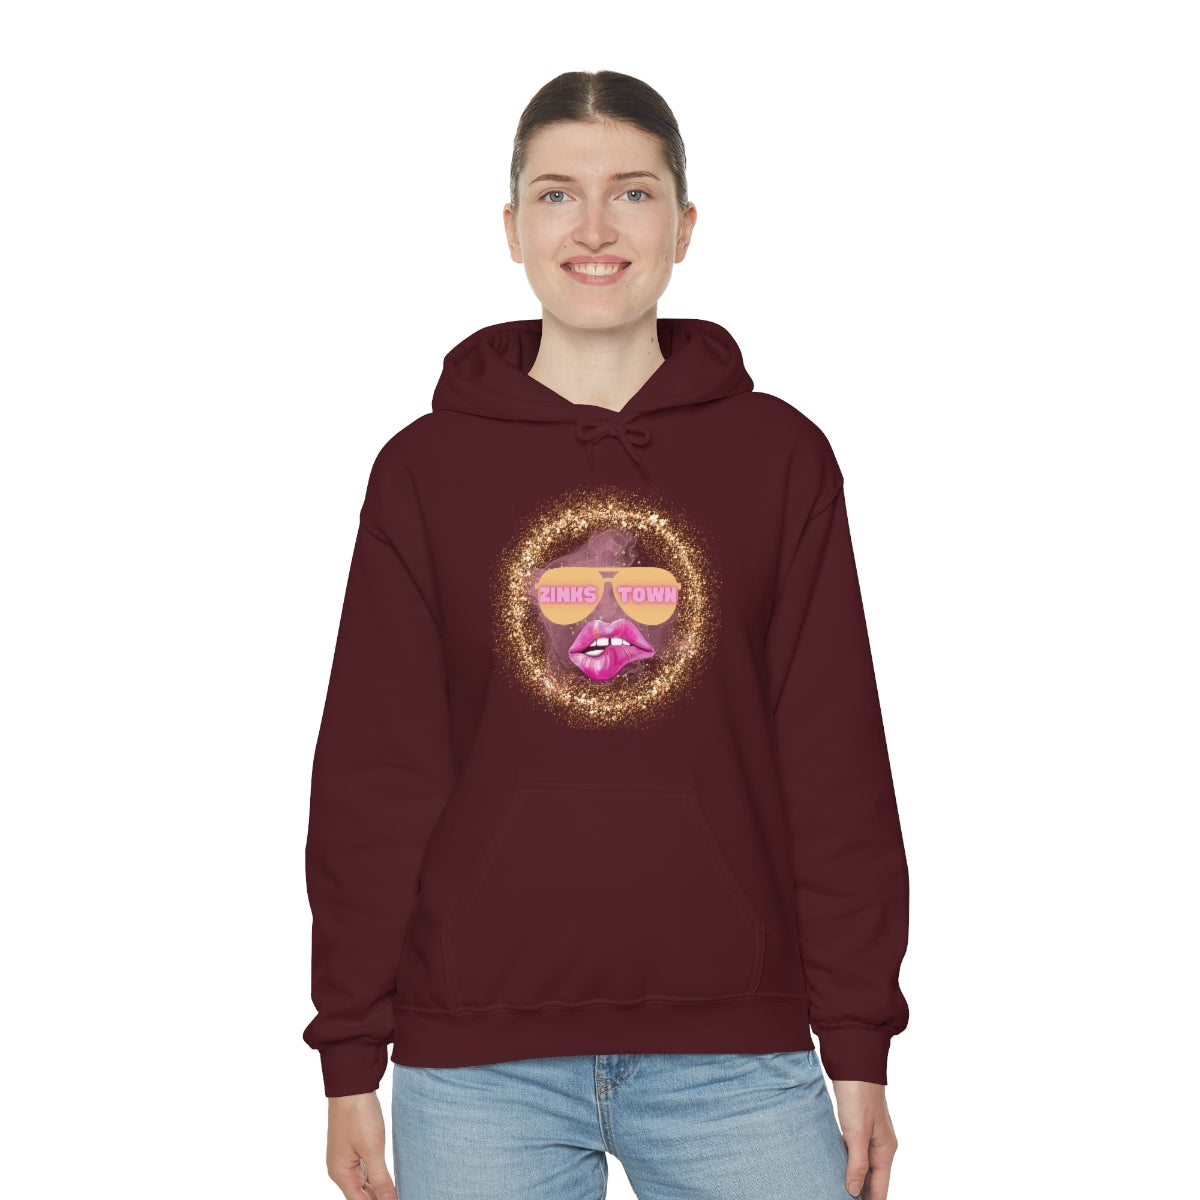 Zinks Town Unisex Heavy Blend™ Hooded Sweatshirt